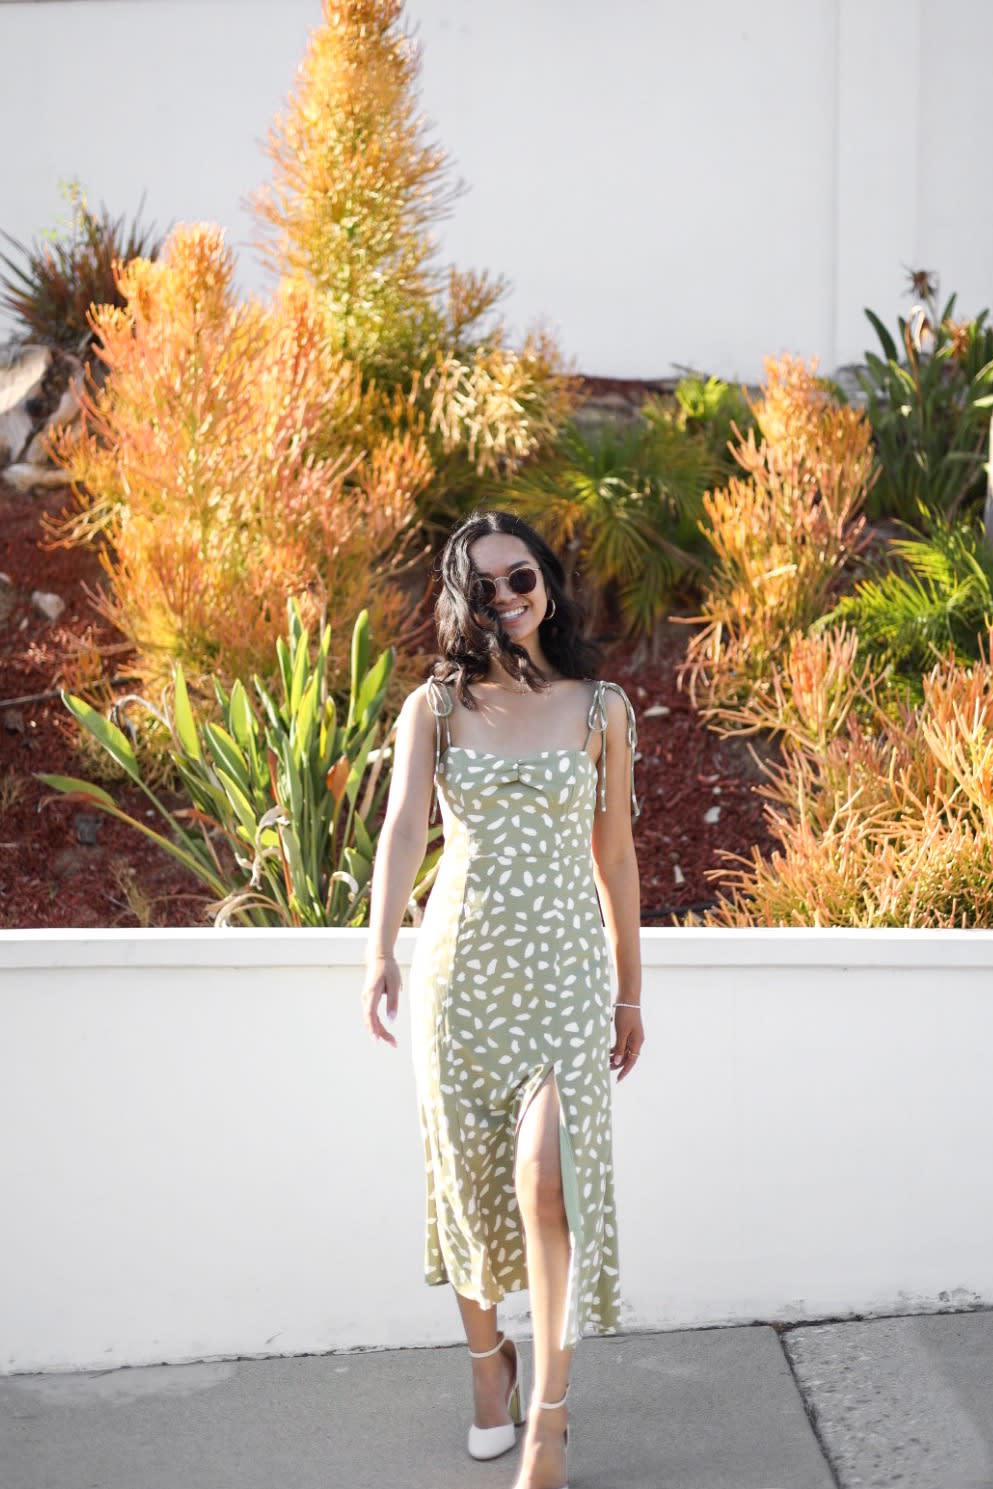 Beach Dresses For Wedding Guests: 13 Stylish Looks To Copy - Lulus.com  Fashion Blog